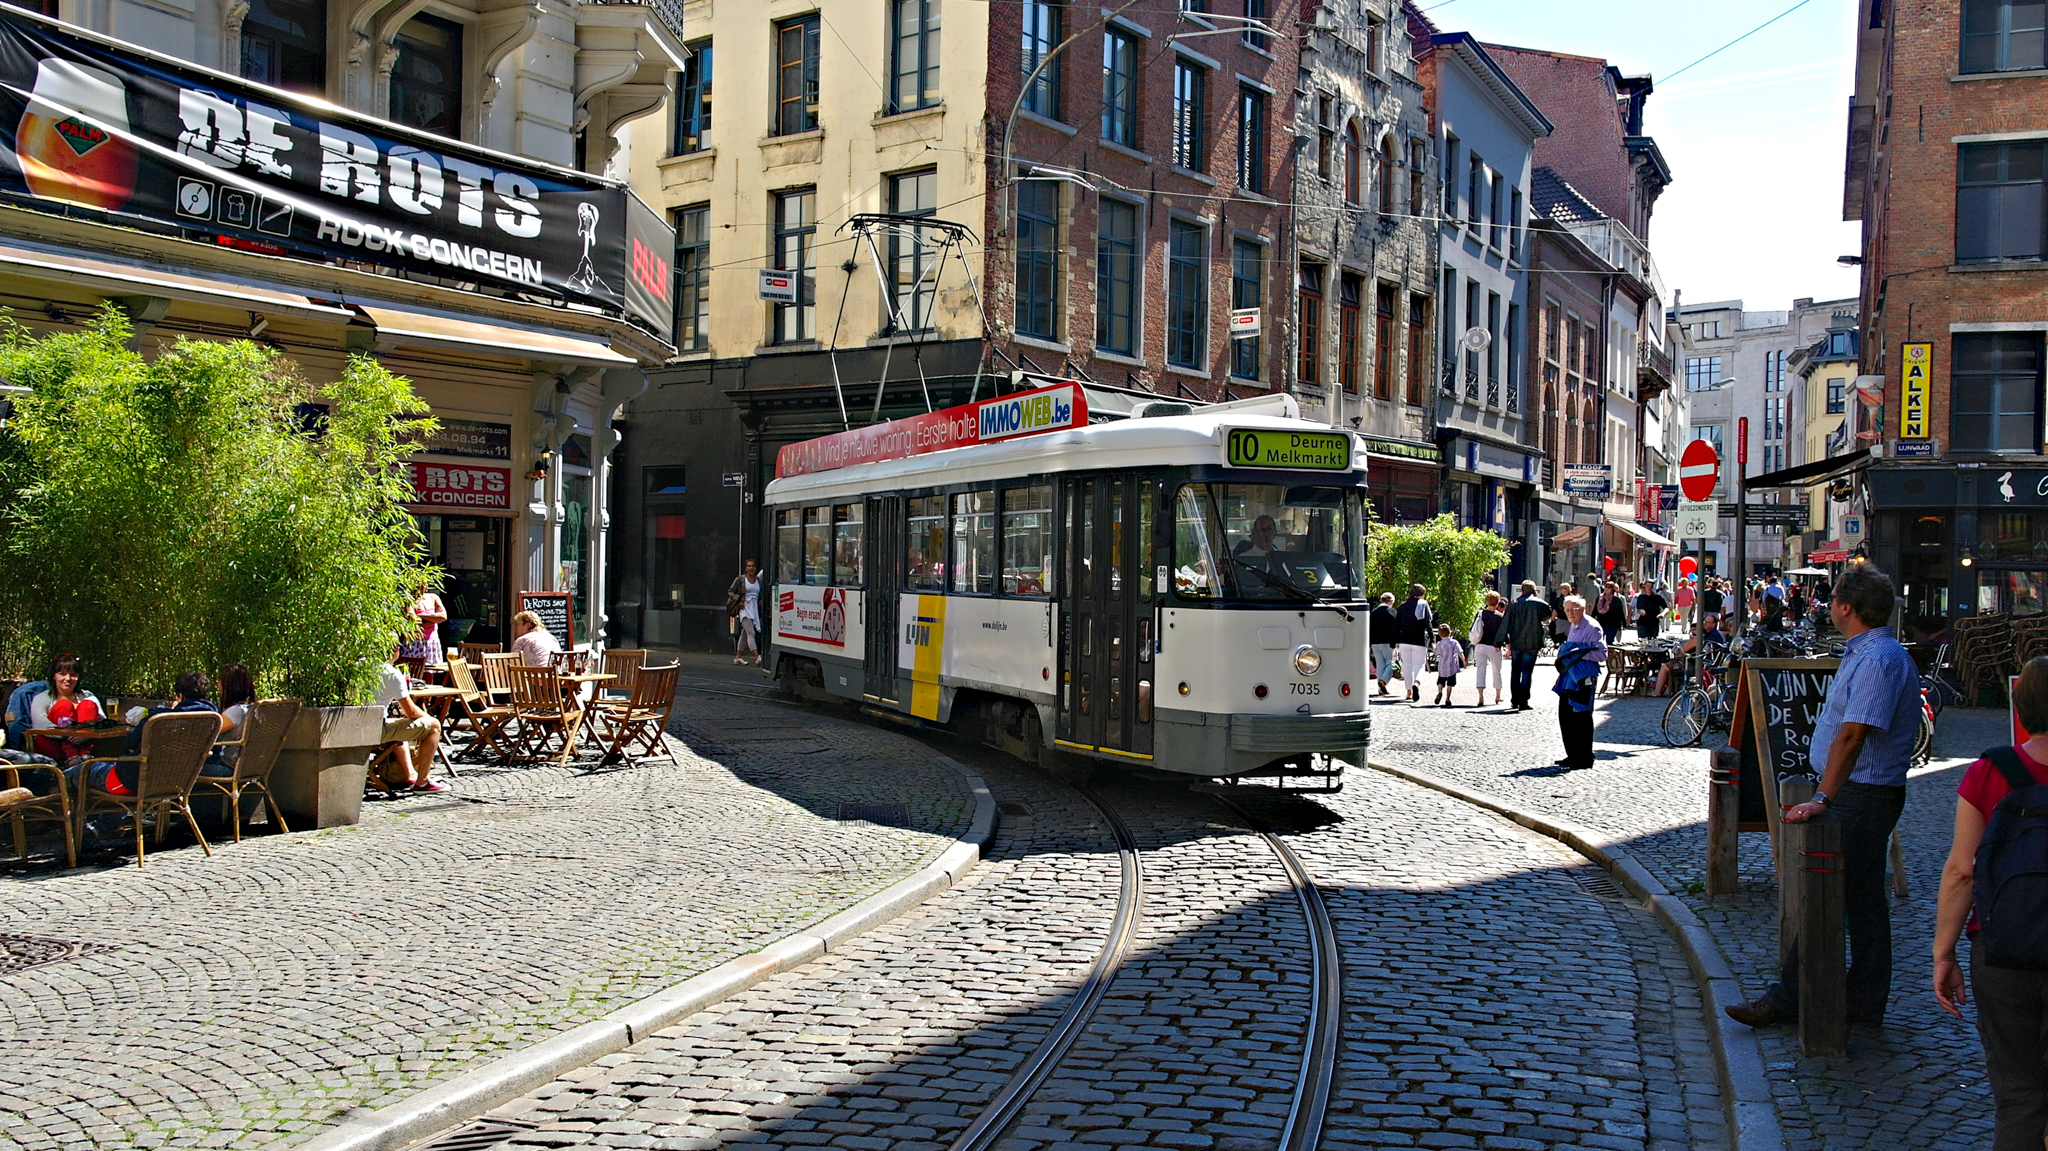 Spårvagn i Antwerpen. Bild: Voogd075 CC BY-SA 3.0